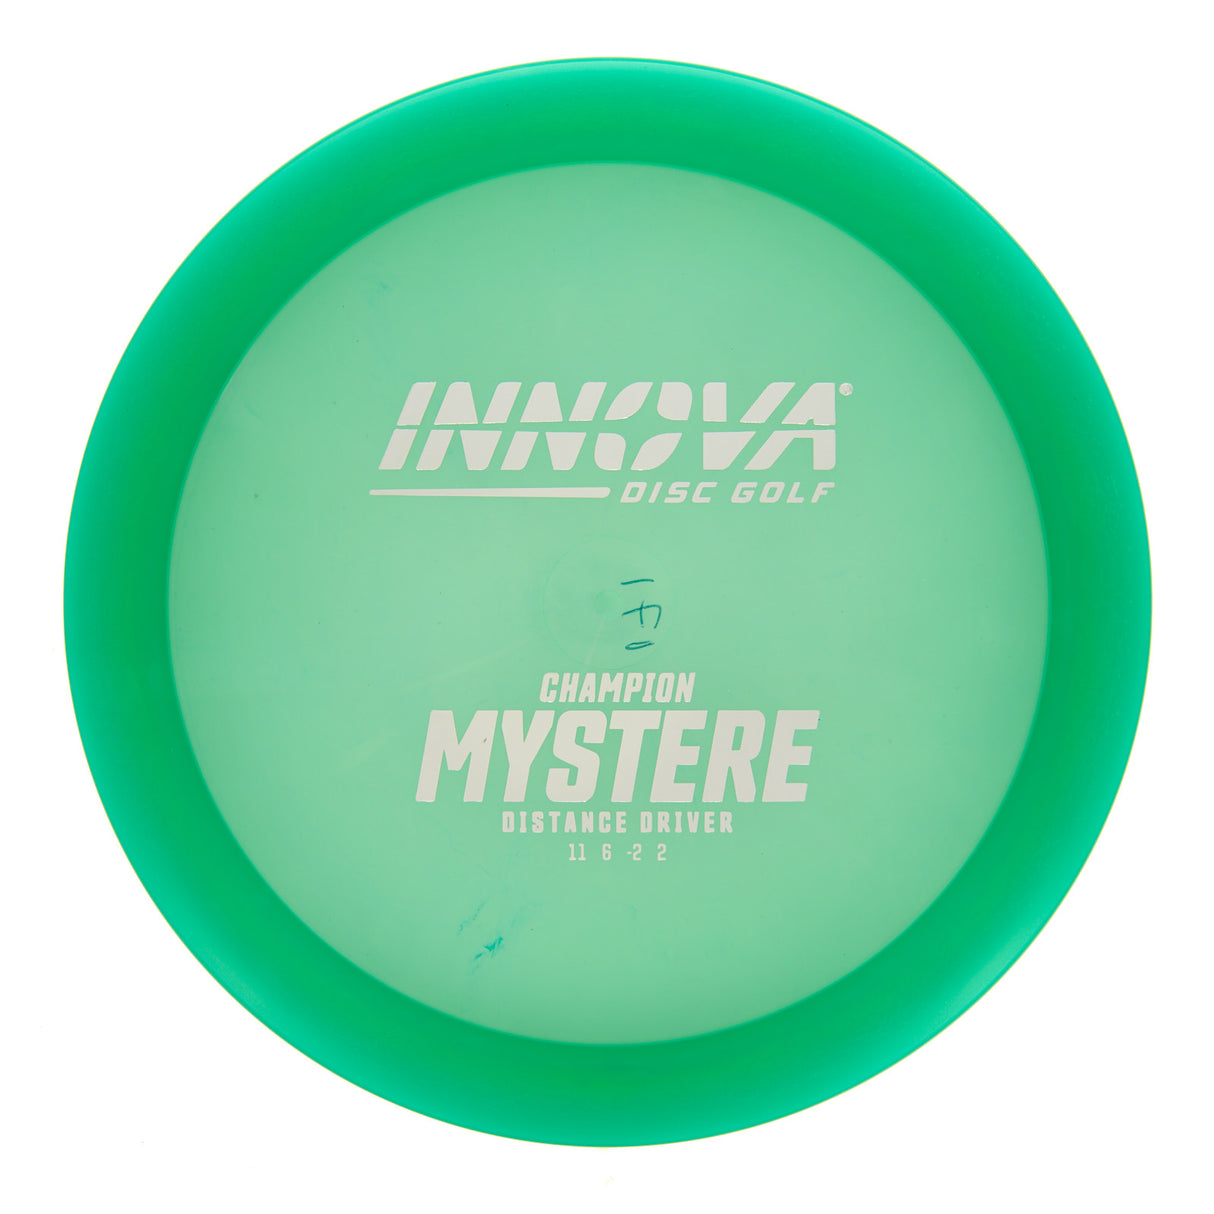 Innova Mystere - Champion 171g | Style 0003